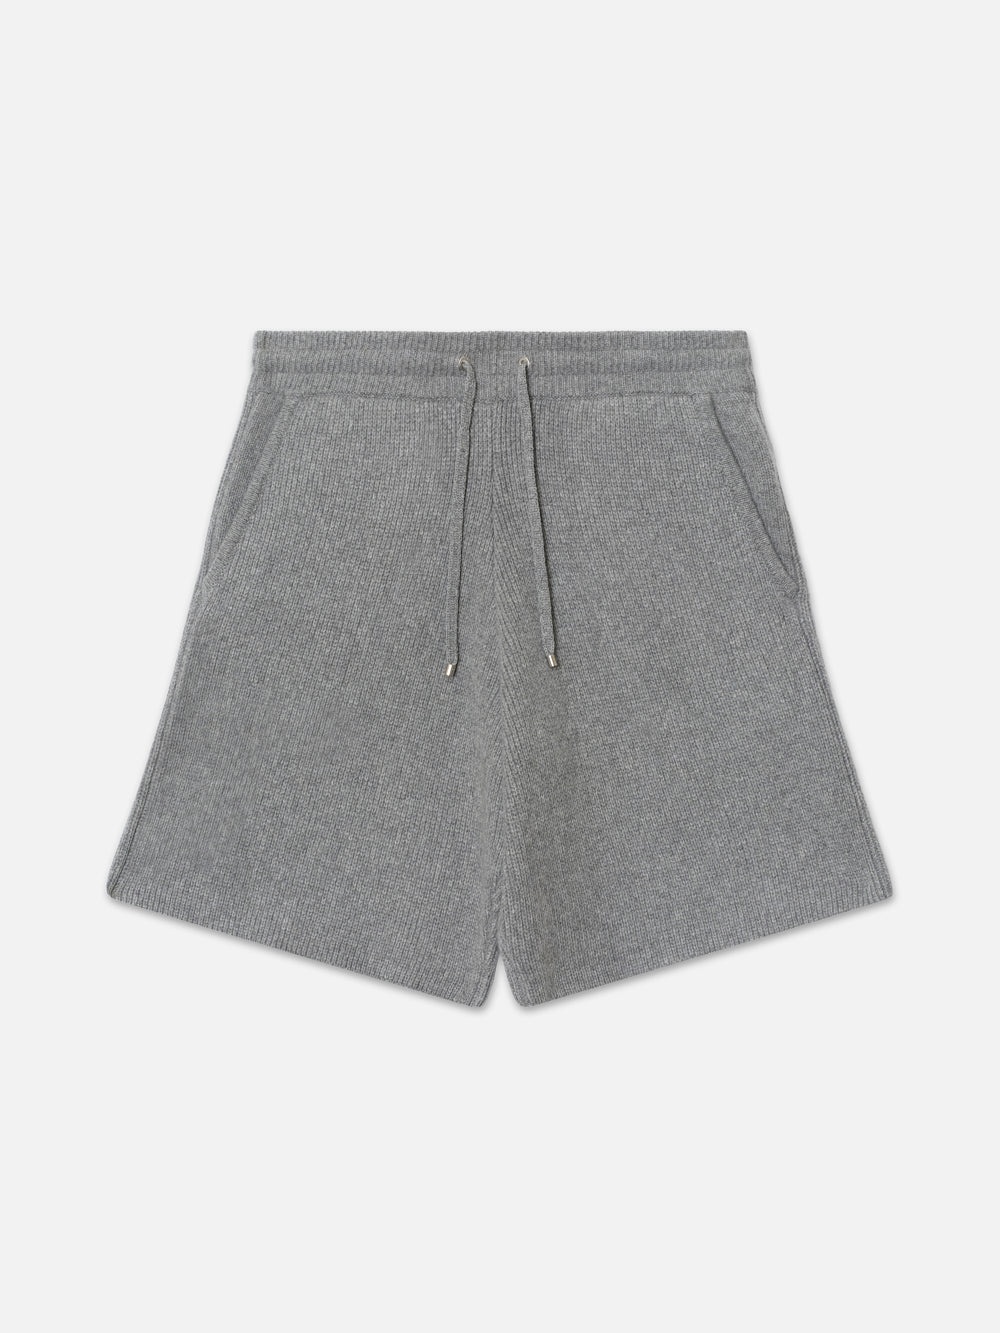 Ritz Men's Cashmere Short in Warm Gray - 1